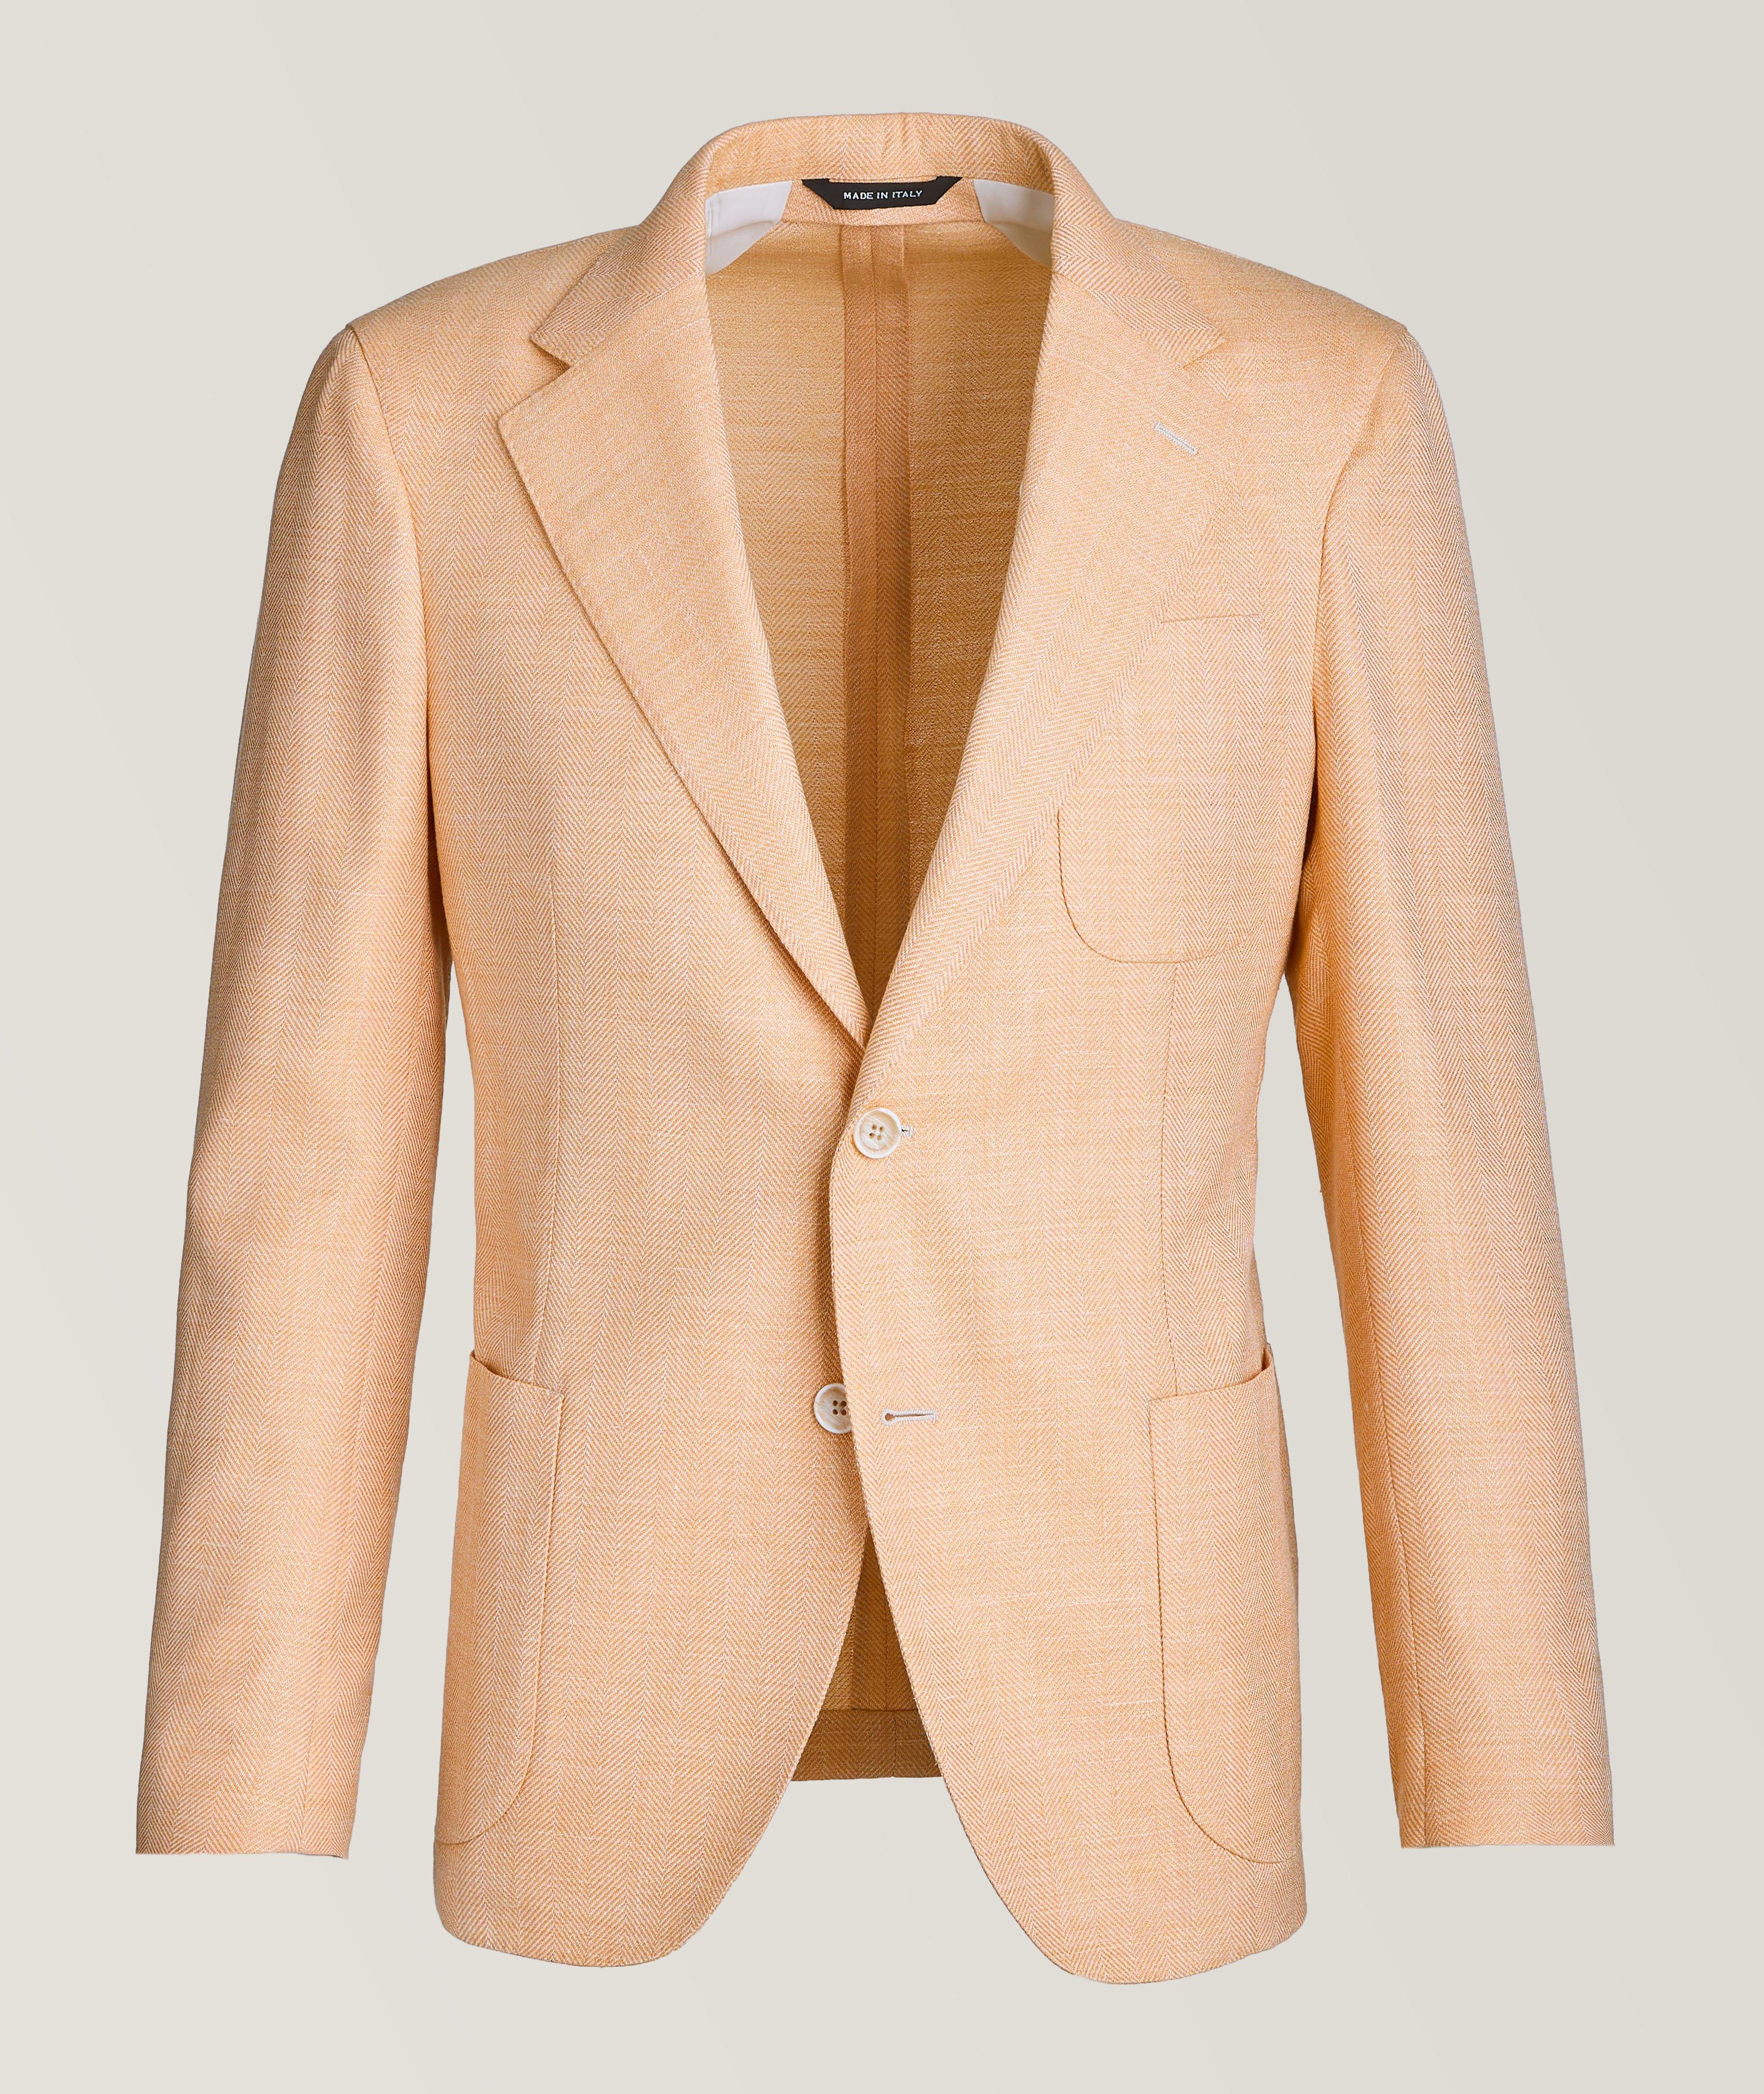 Tonal Herringbone Wool, Silk & Linen Sport Jacket image 0